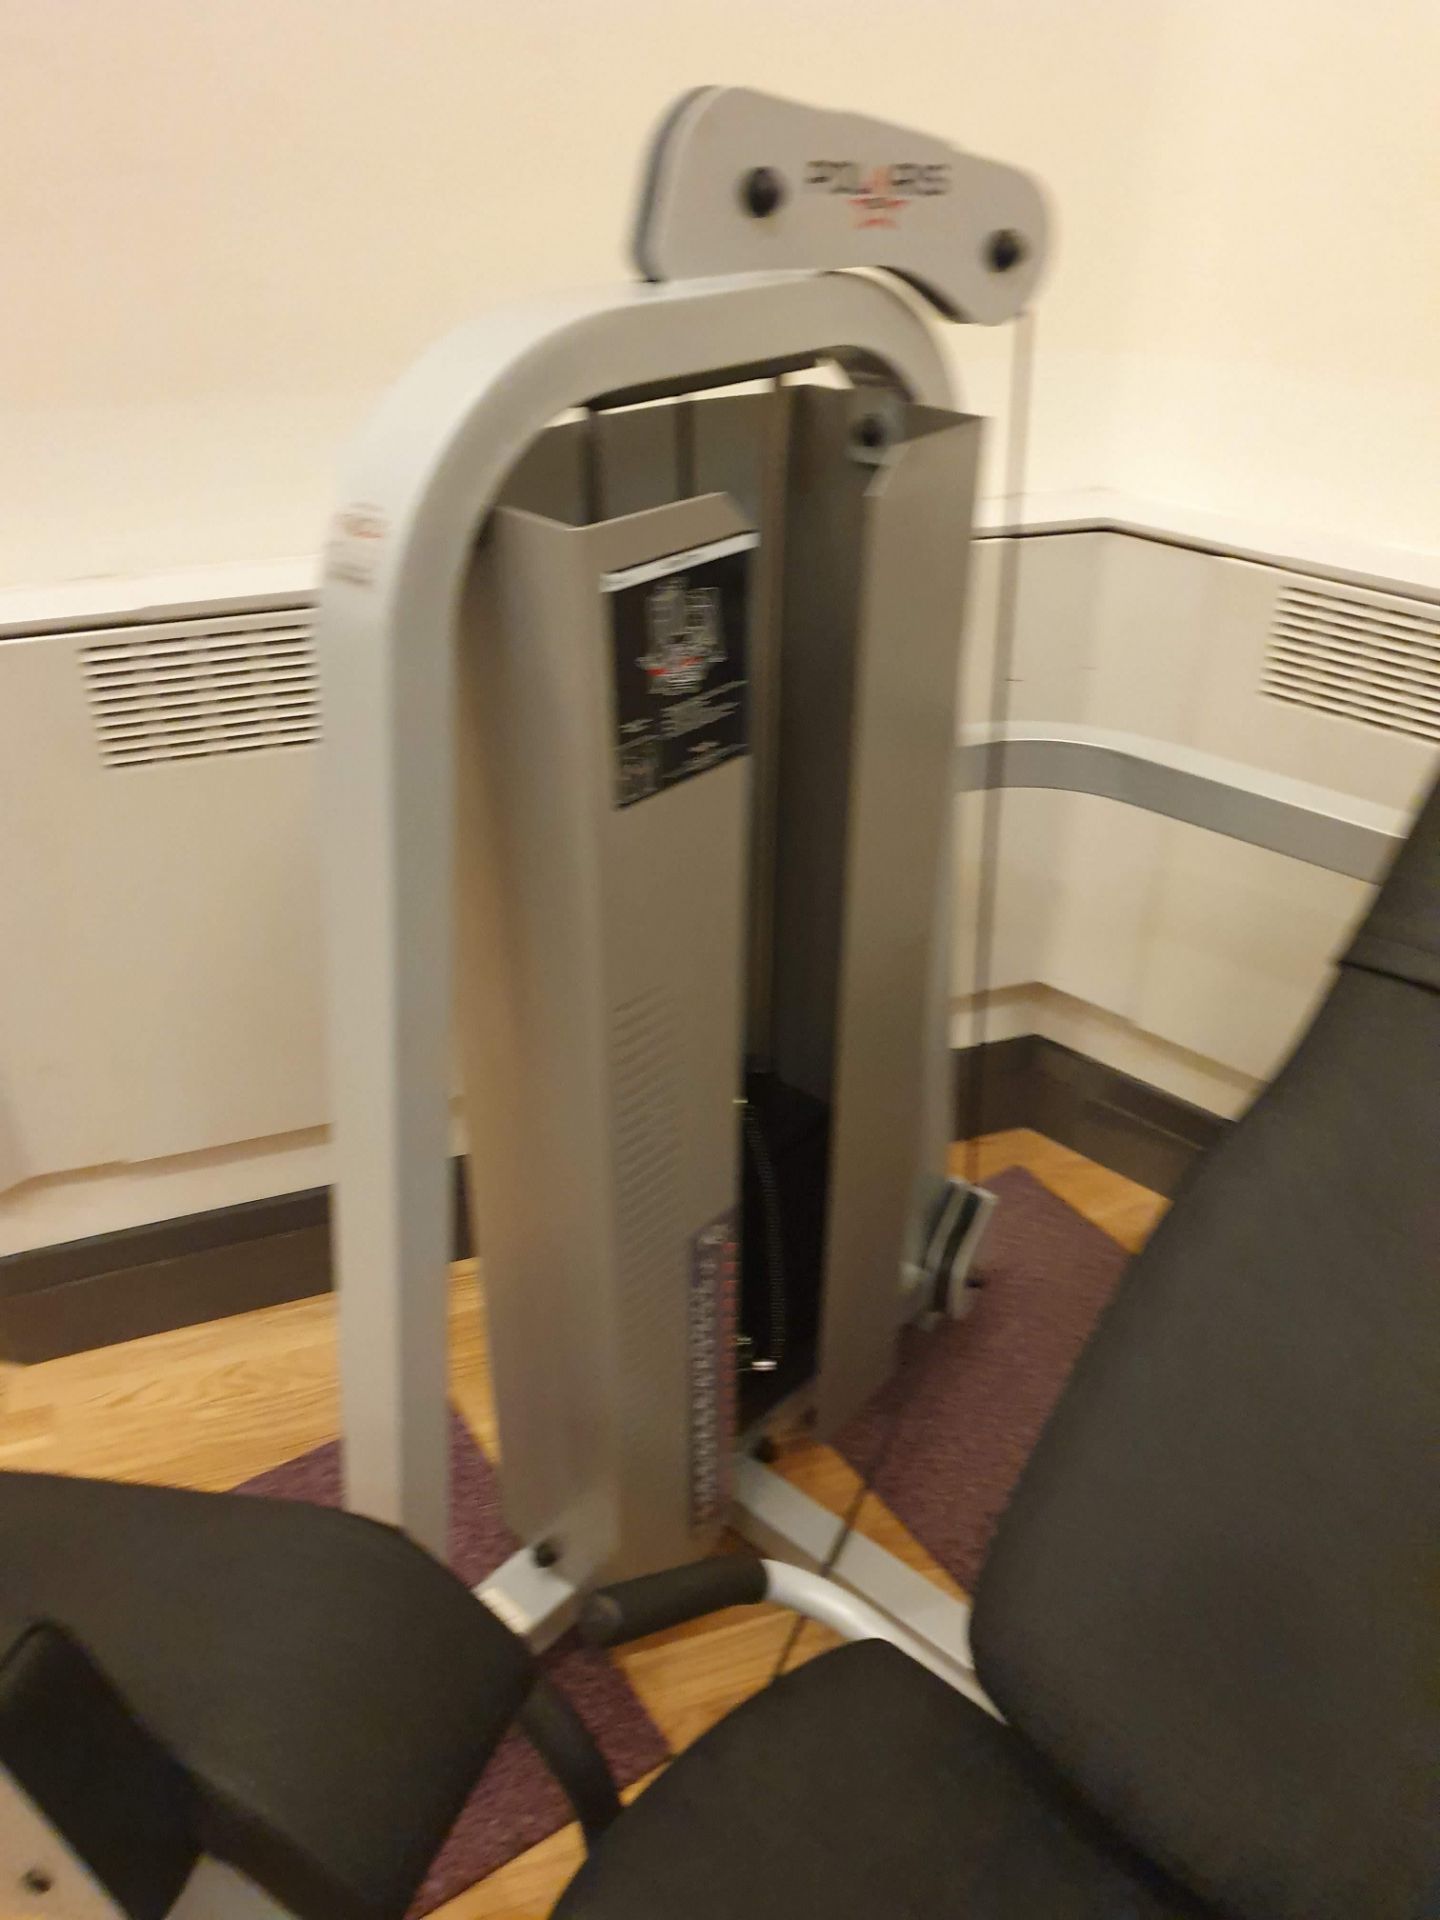 1 x Polaris DE-207 Abductor Gym Machine - CL552 - Location: Altrincham WA14 - Image 2 of 5